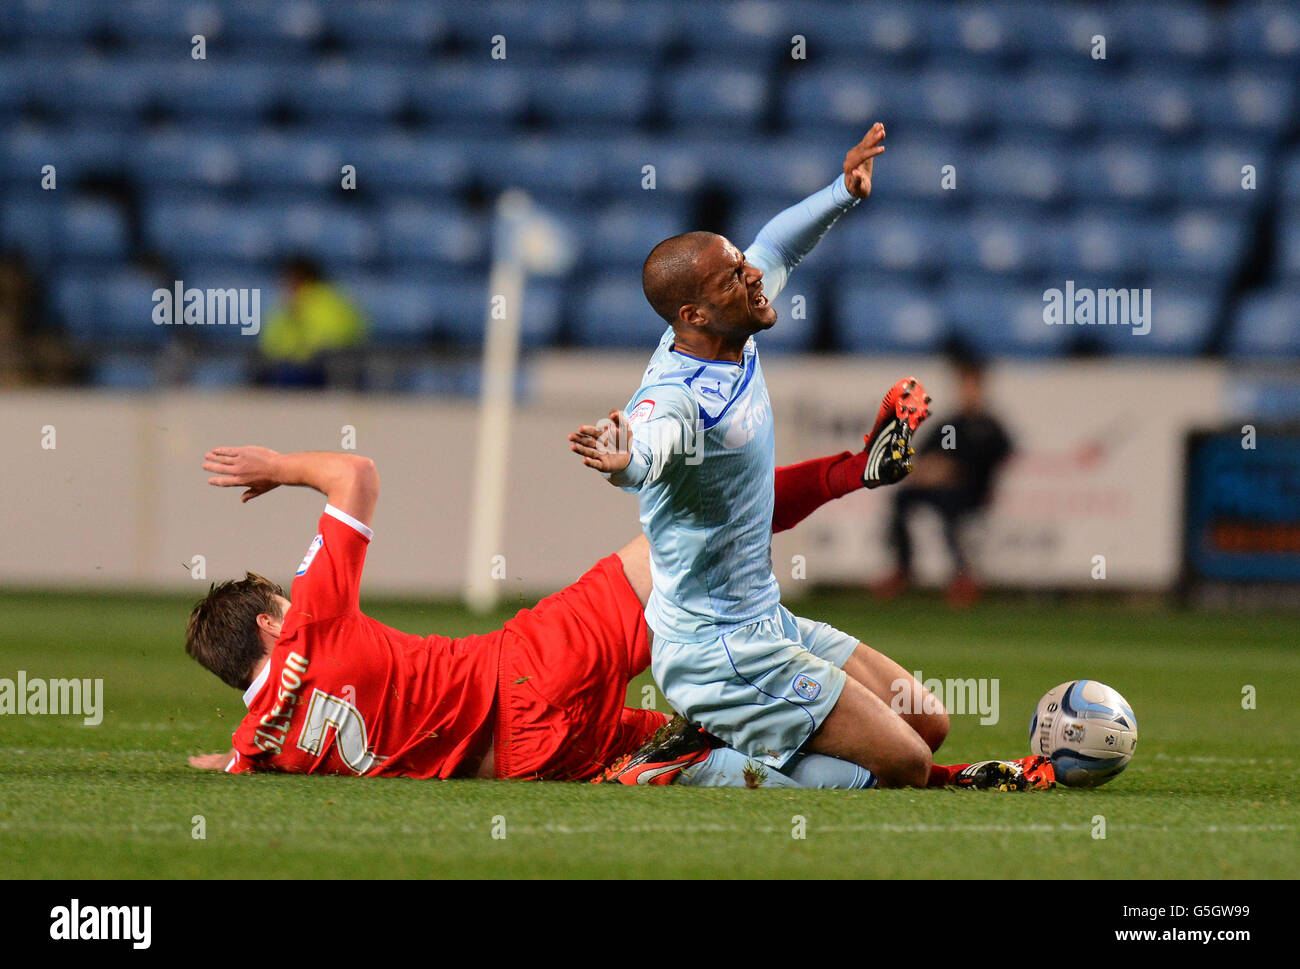 Coventry City's David McGoldrick tackled by Milton Keynes Dons' Stephen Gleeson Stock Photo